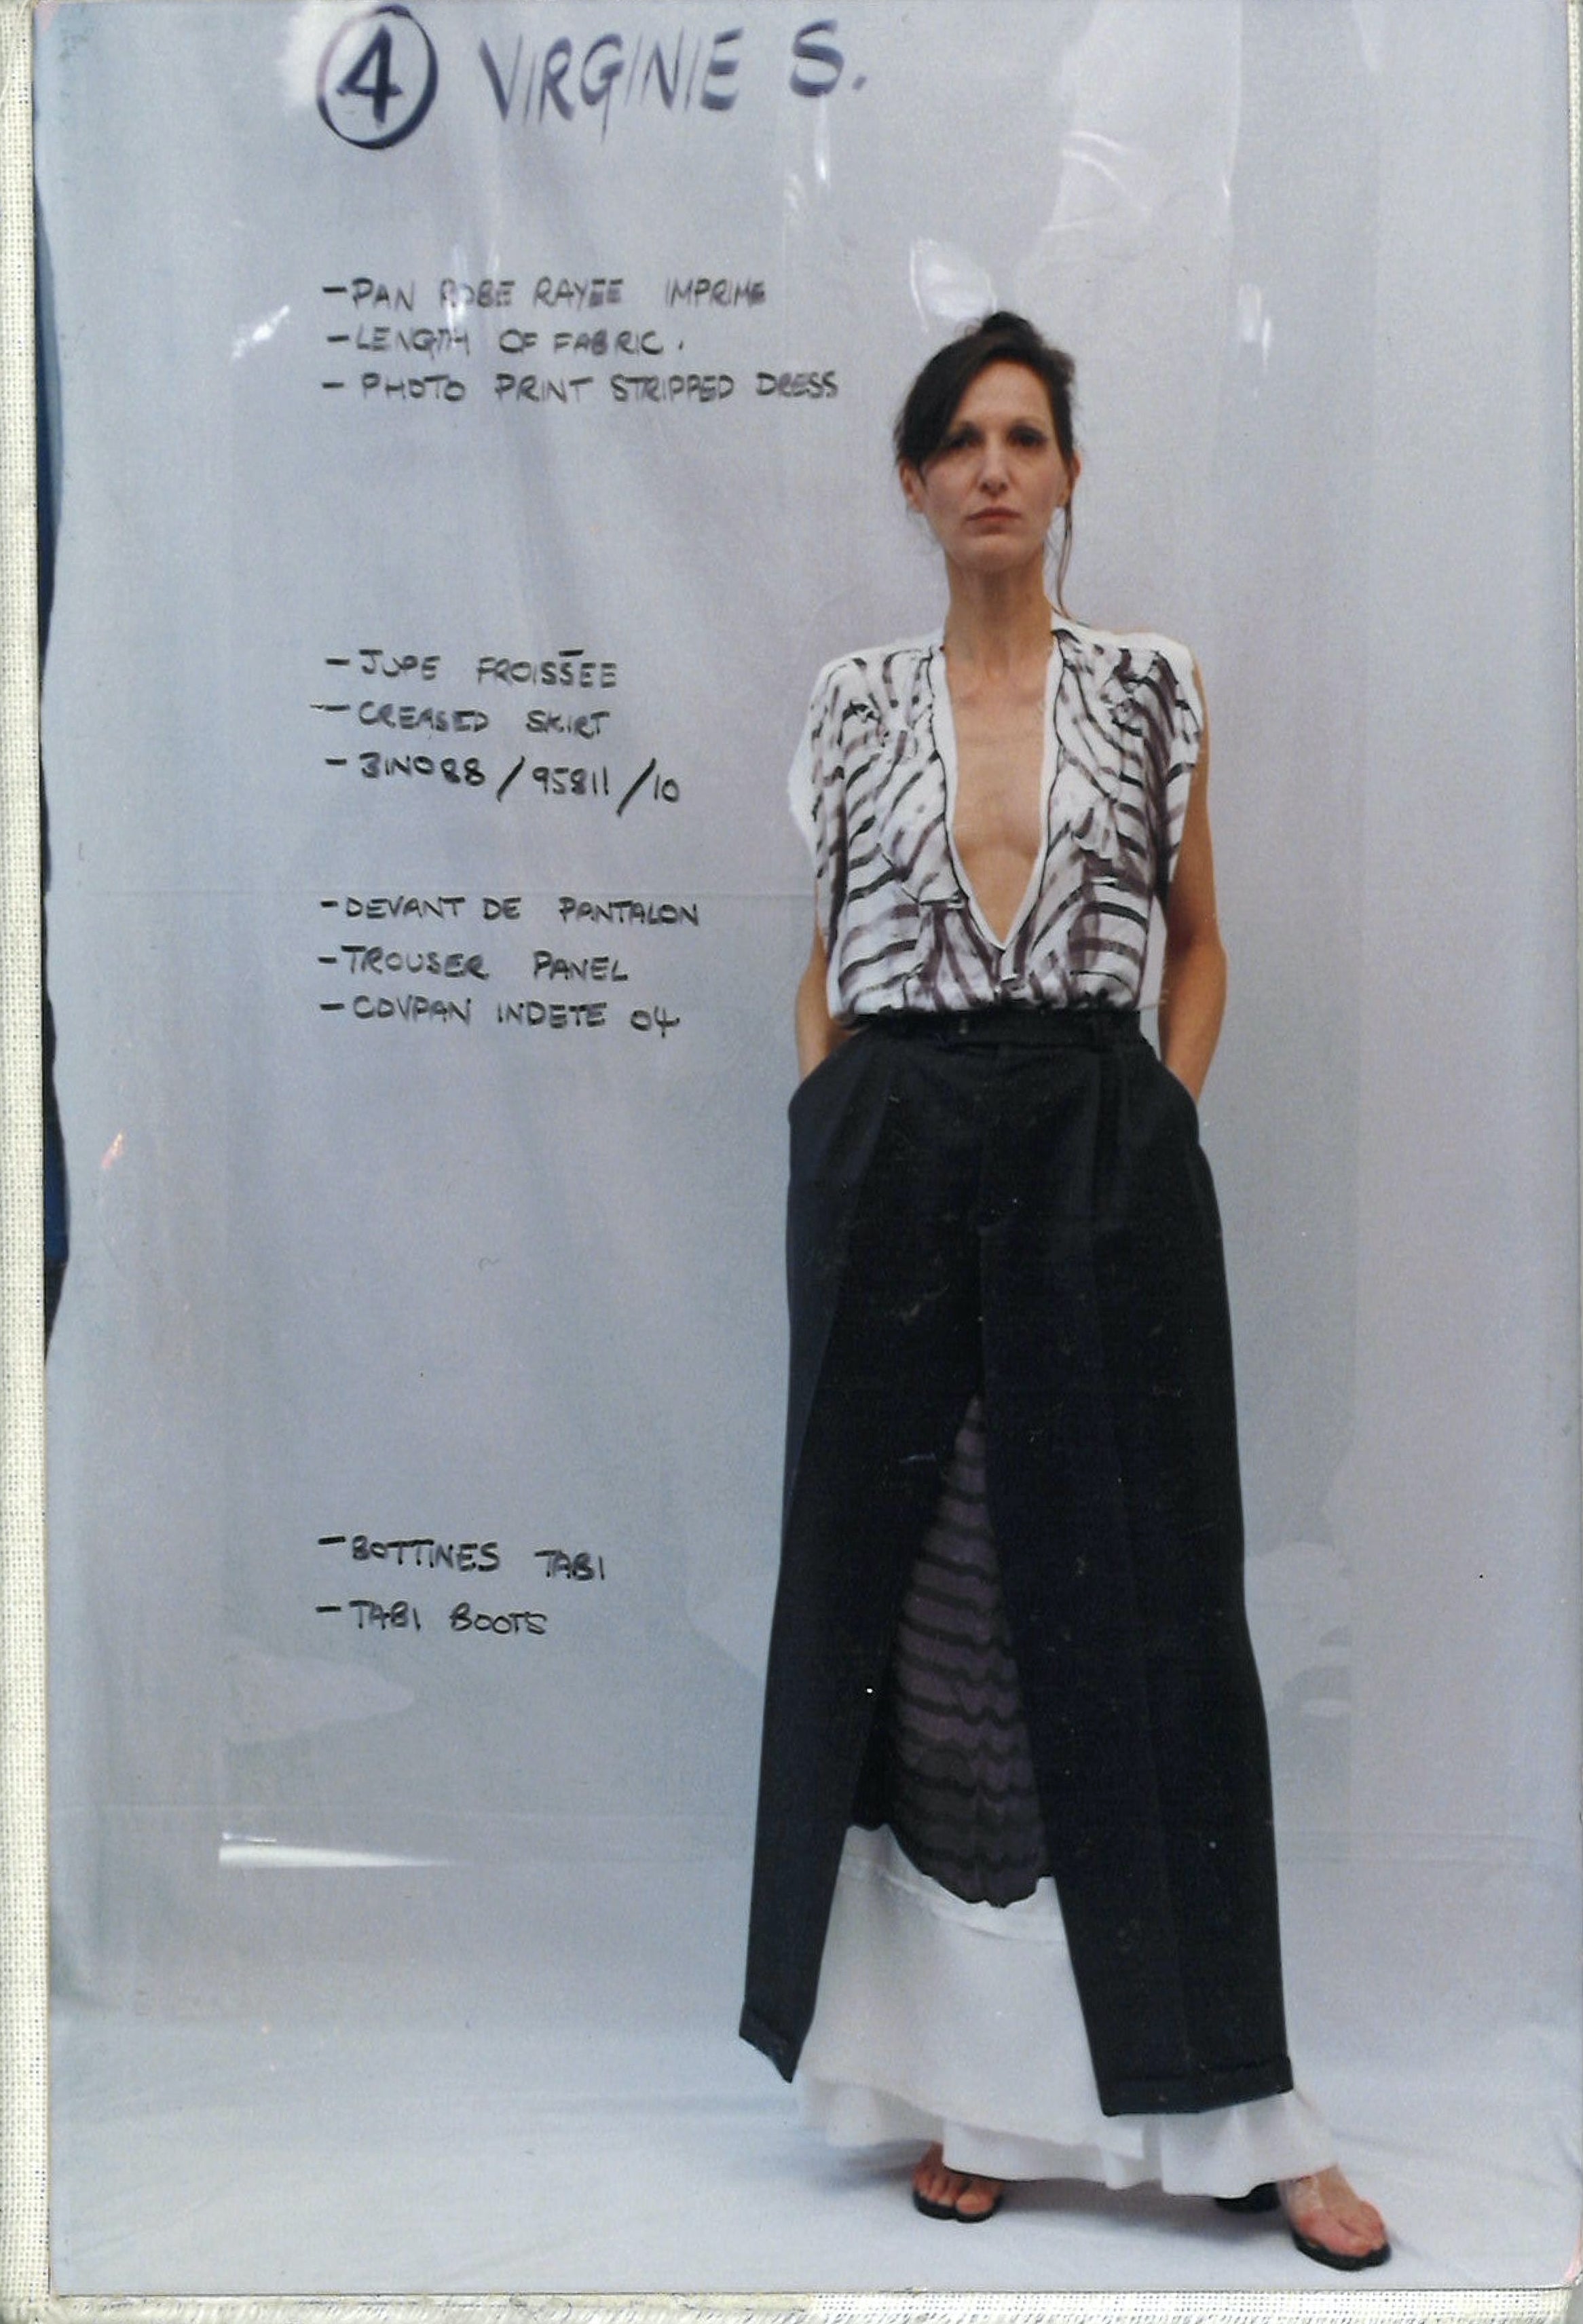 Maison Martin Margiela Lookbook
Womenswear Collection Spring/Summer 1999